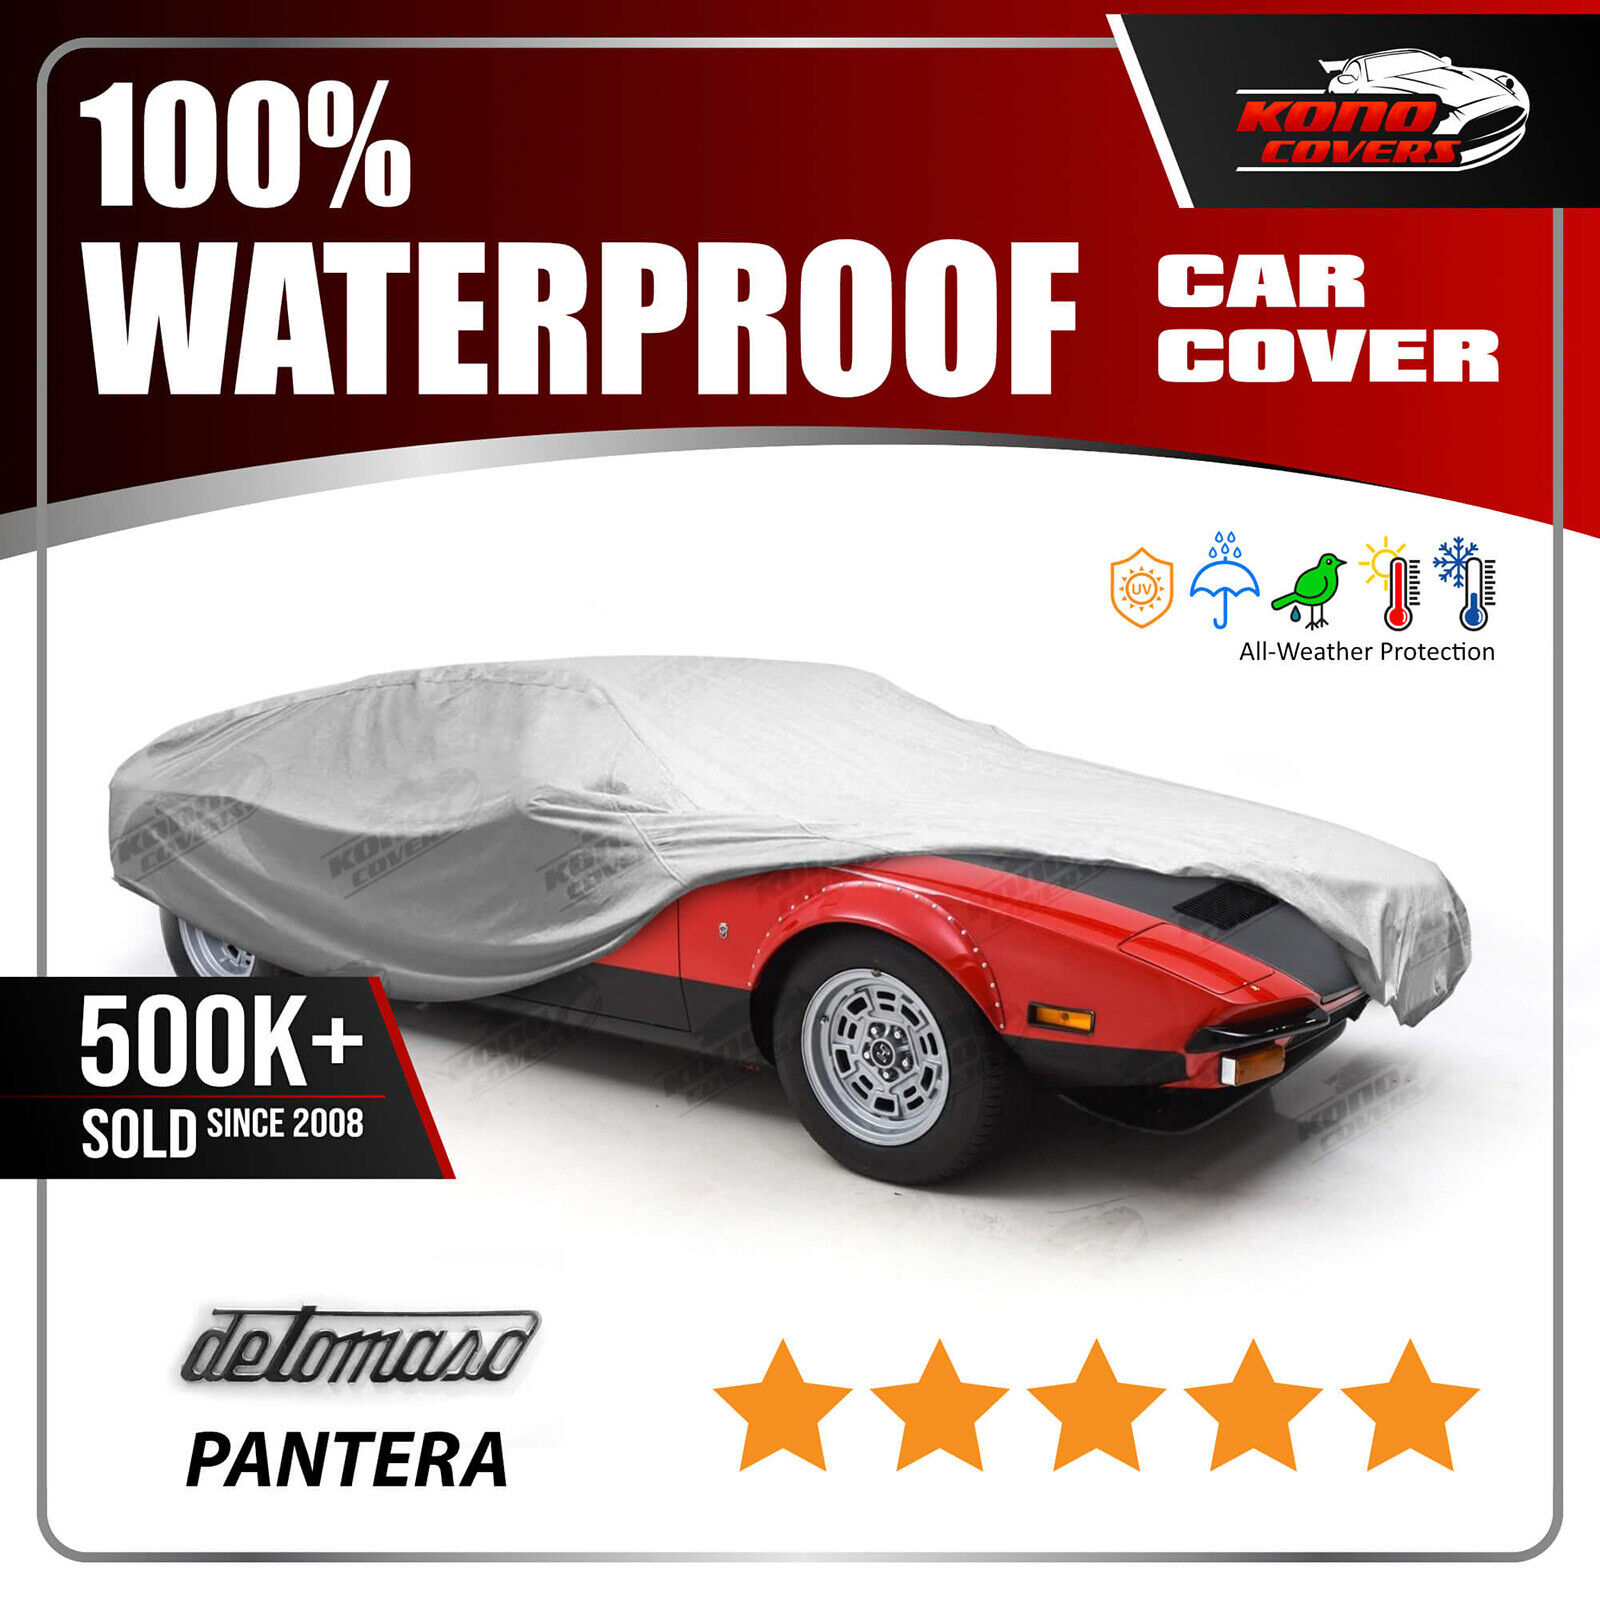 DETOMASO PANTERA 1971-1974 CAR COVER - 100% Waterproof 100% Breathable